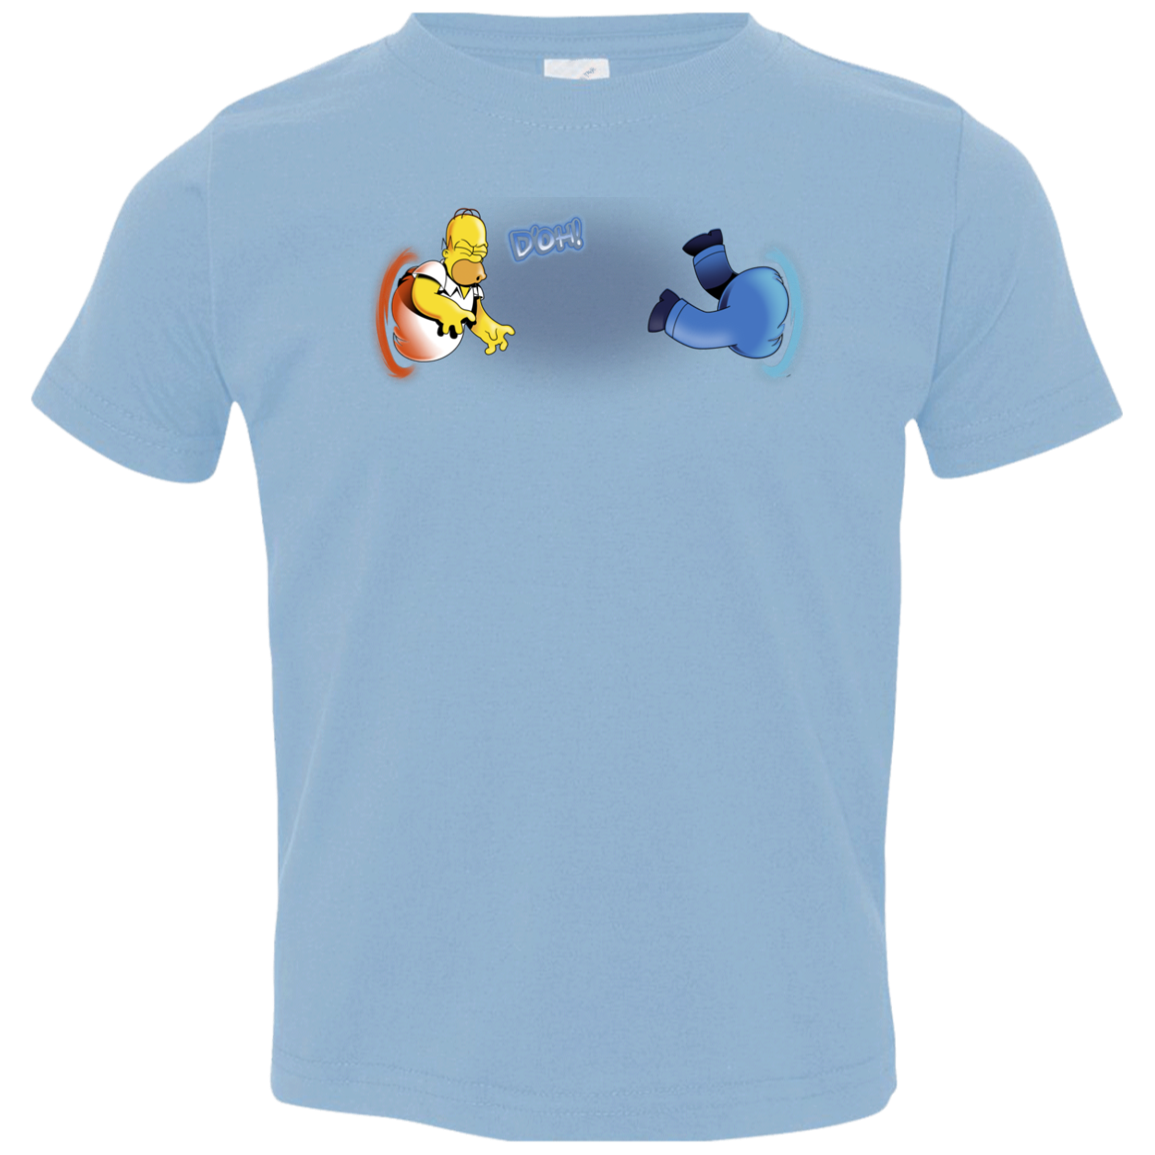 Portal D'oh Toddler Premium T-Shirt